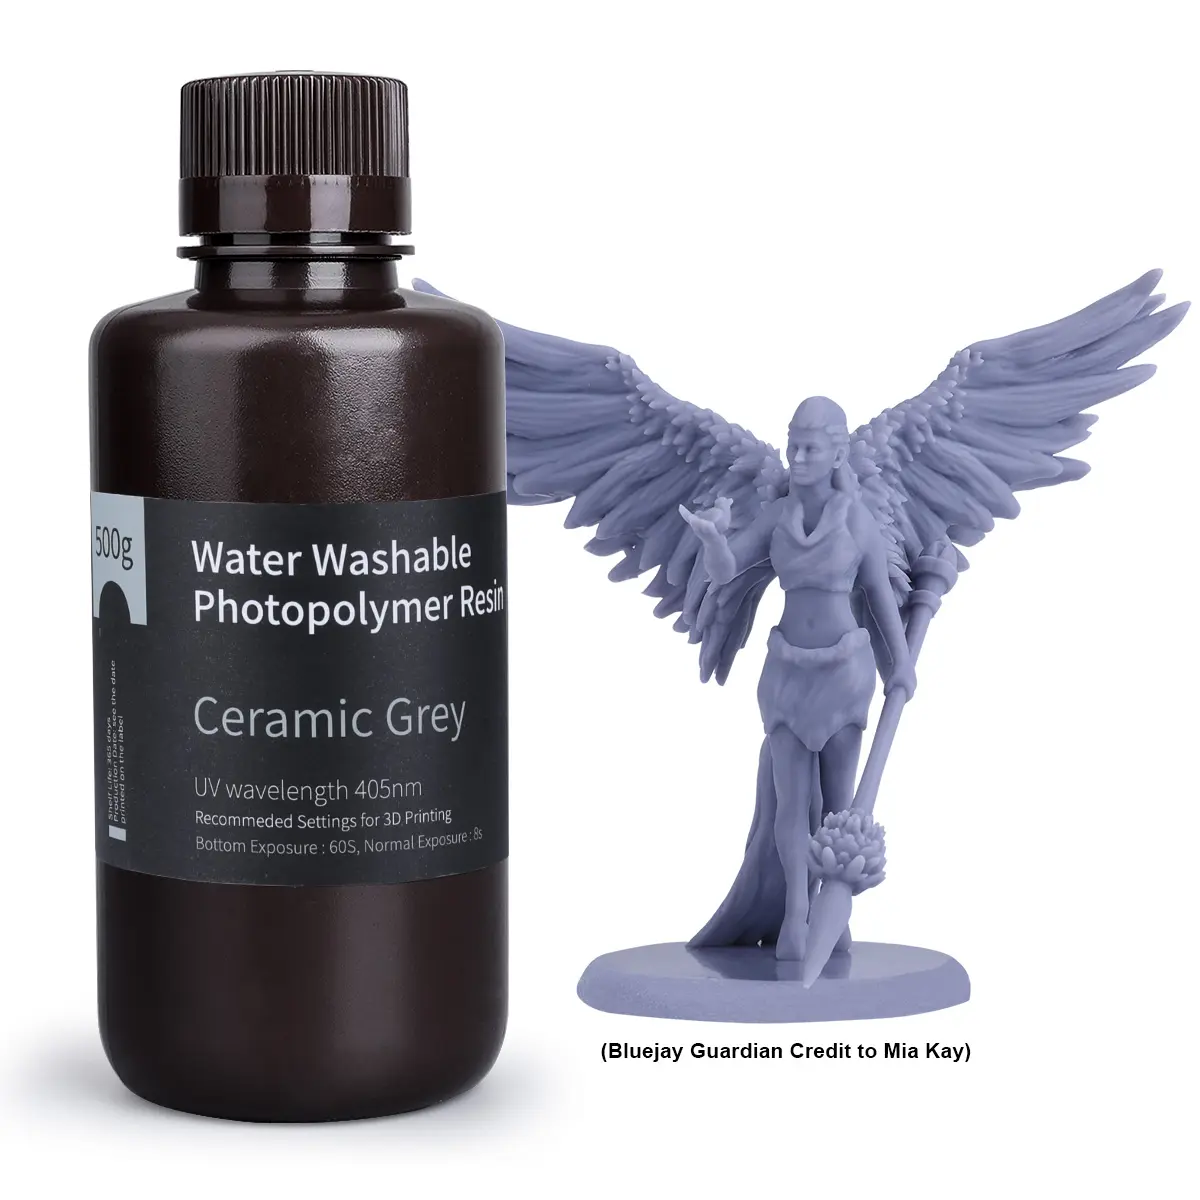 ELEGOO 1000g Ceramic Grey UV Wavelength 405nm Resin Water Washable Photopolymer Resin for LCD 3D Printing